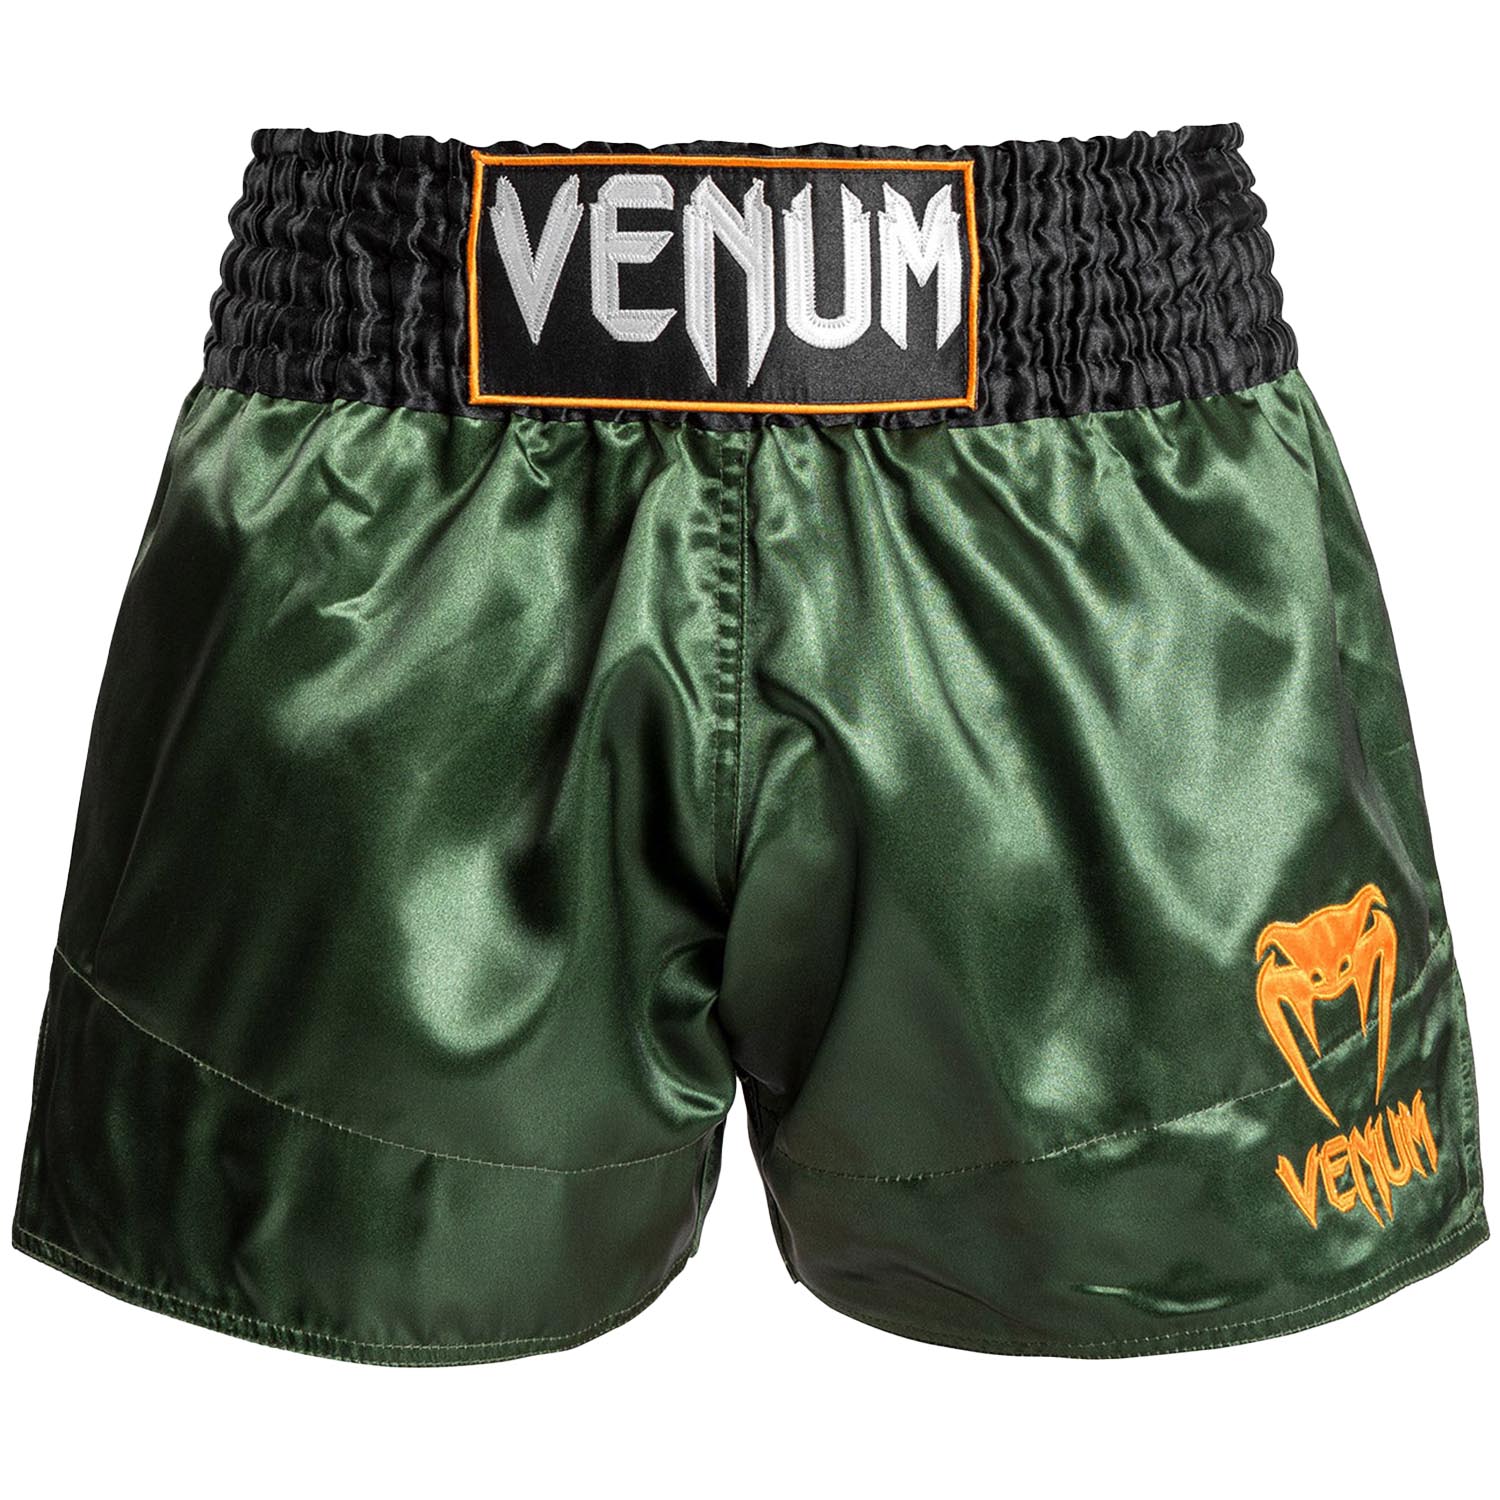 VENUM Muay Thai Shorts, Classic, green-black-gold